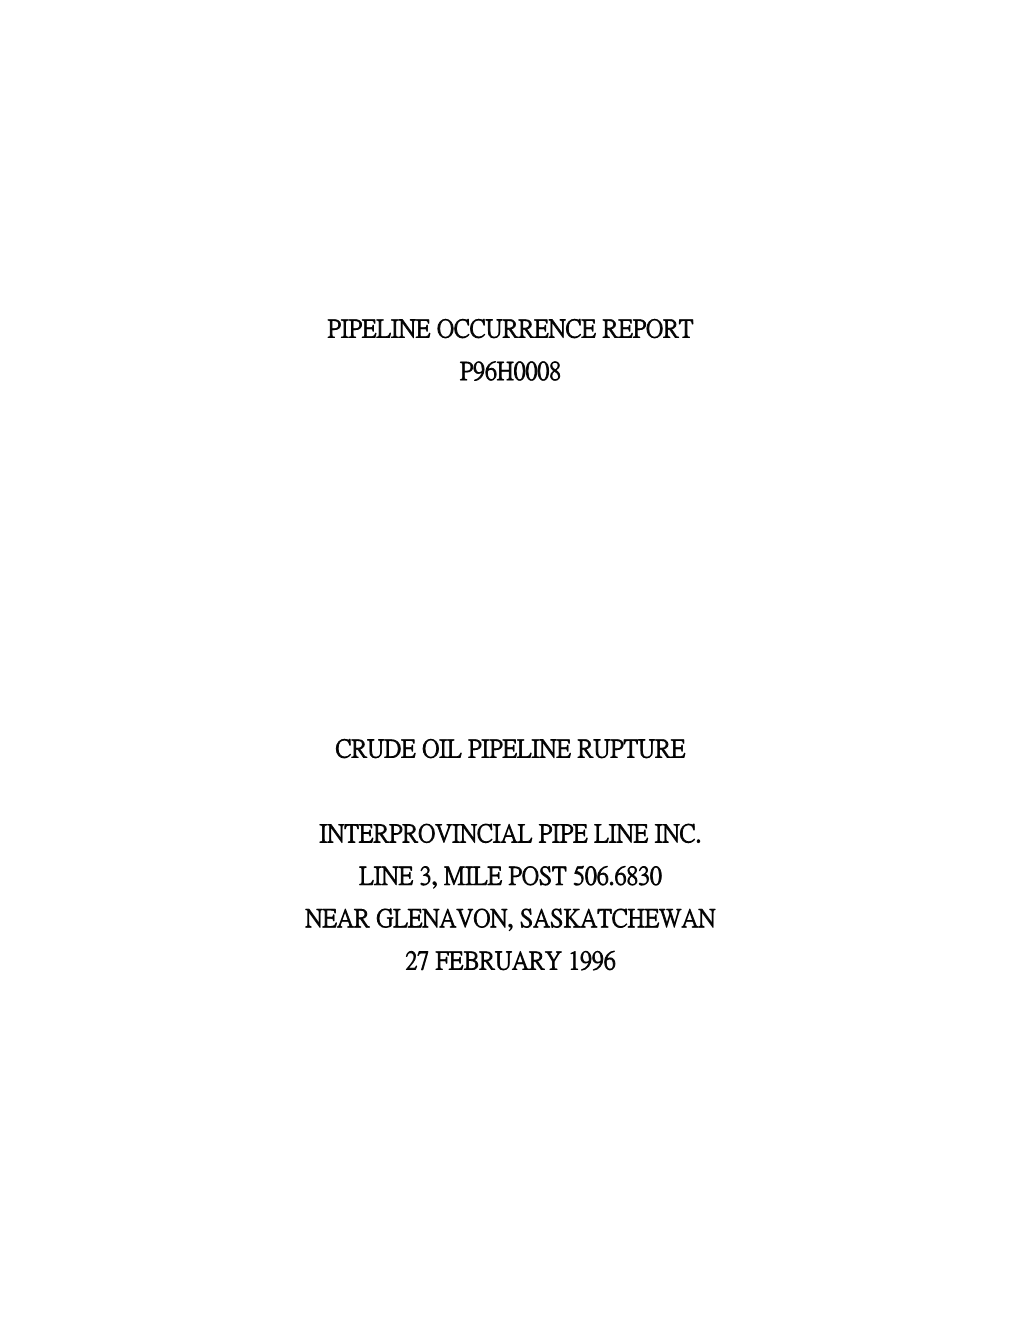 Pipeline Investigation Report P96H0008